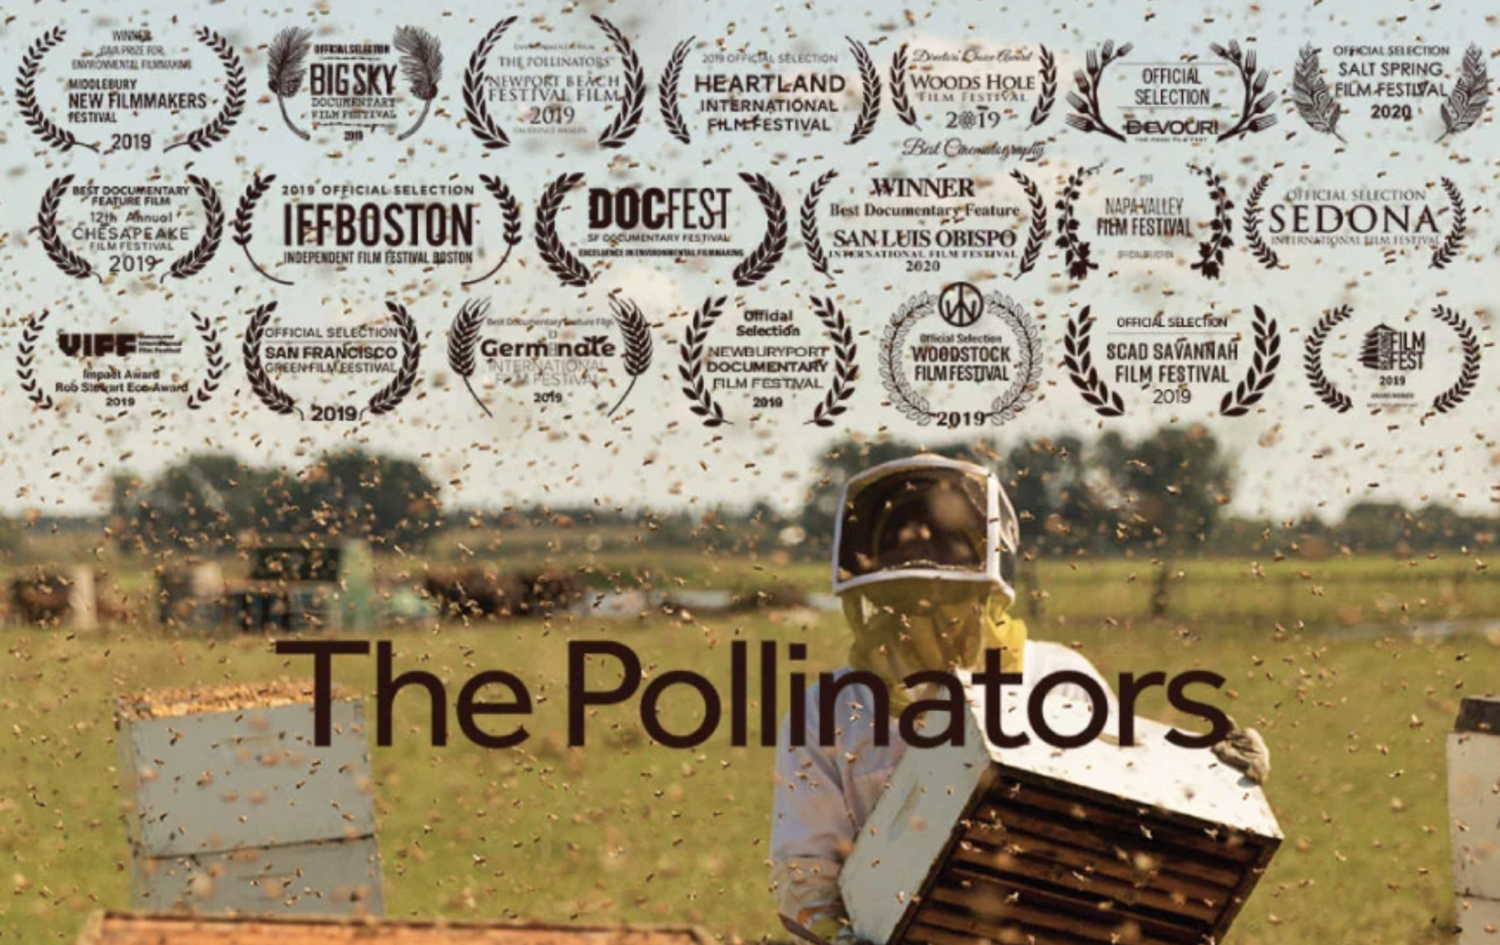 The pollinators